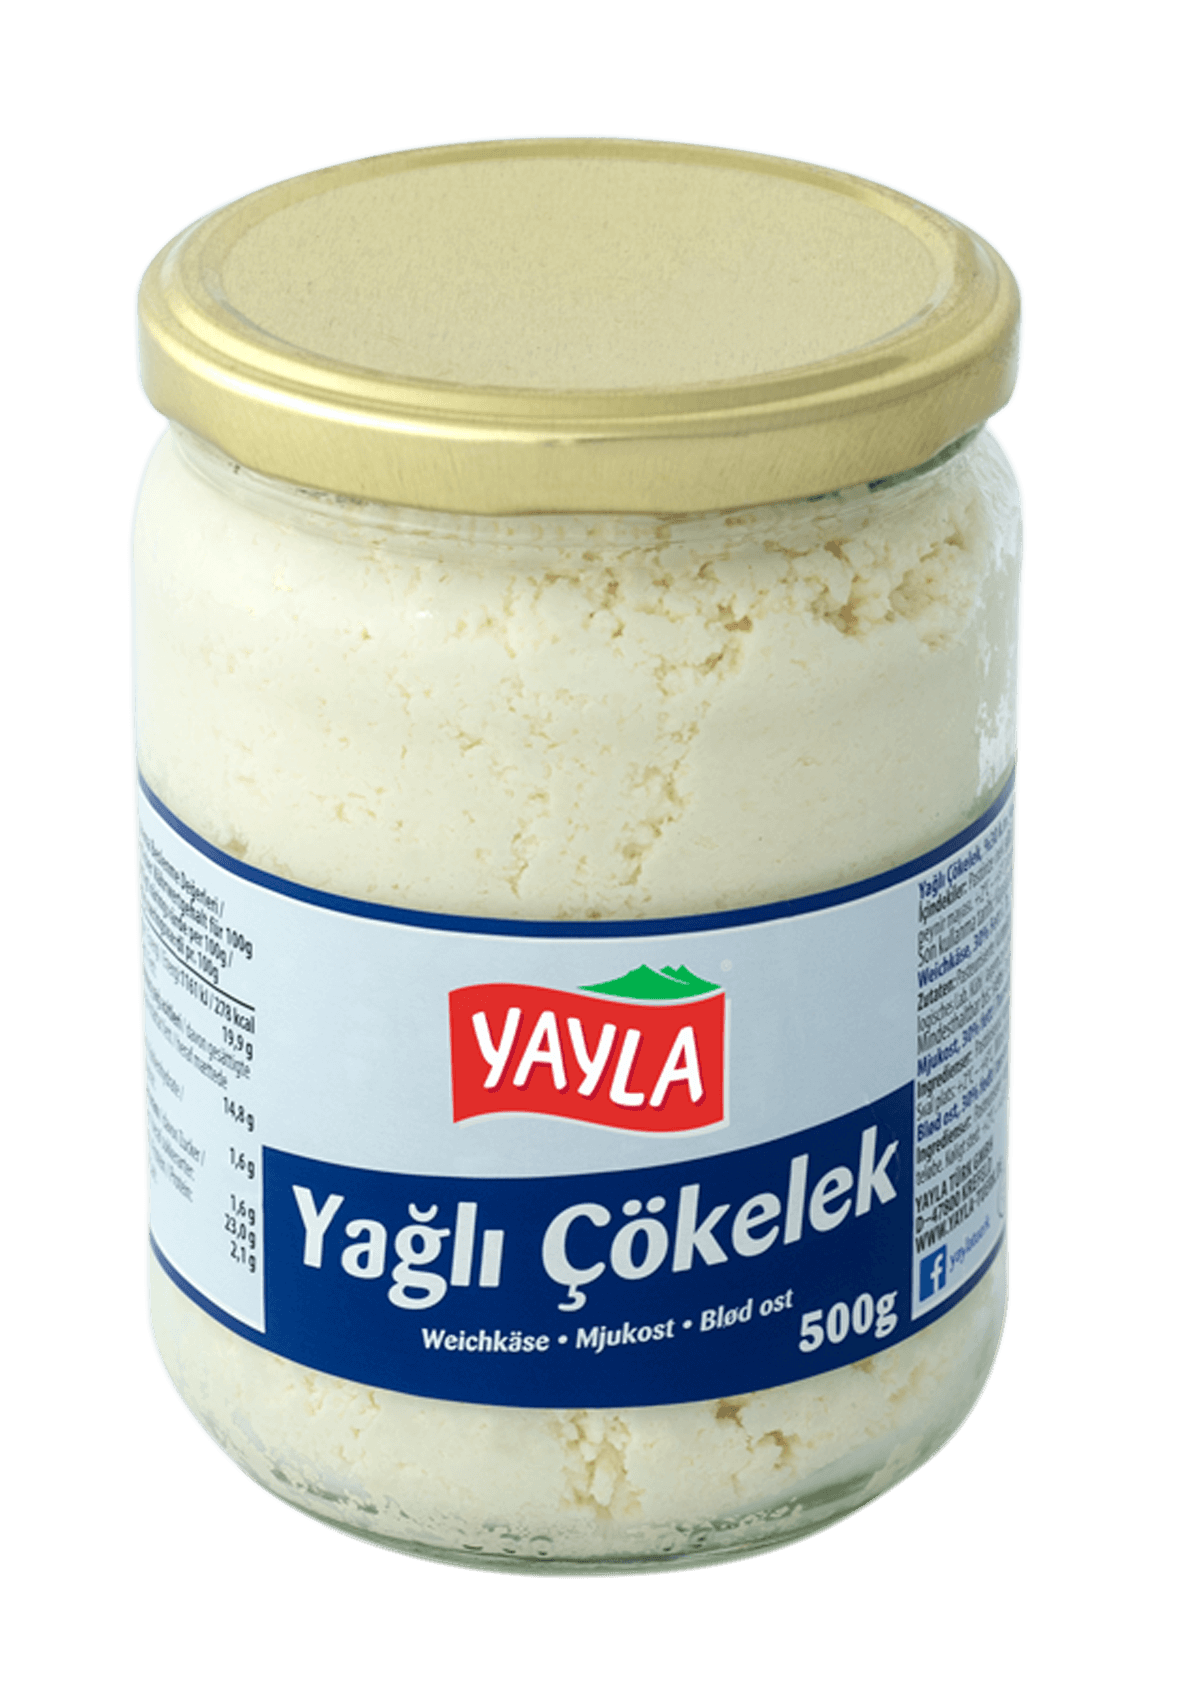 Yayla Yagli Cökelek Peyniri / Weichkäse nach türkischer Art 500g